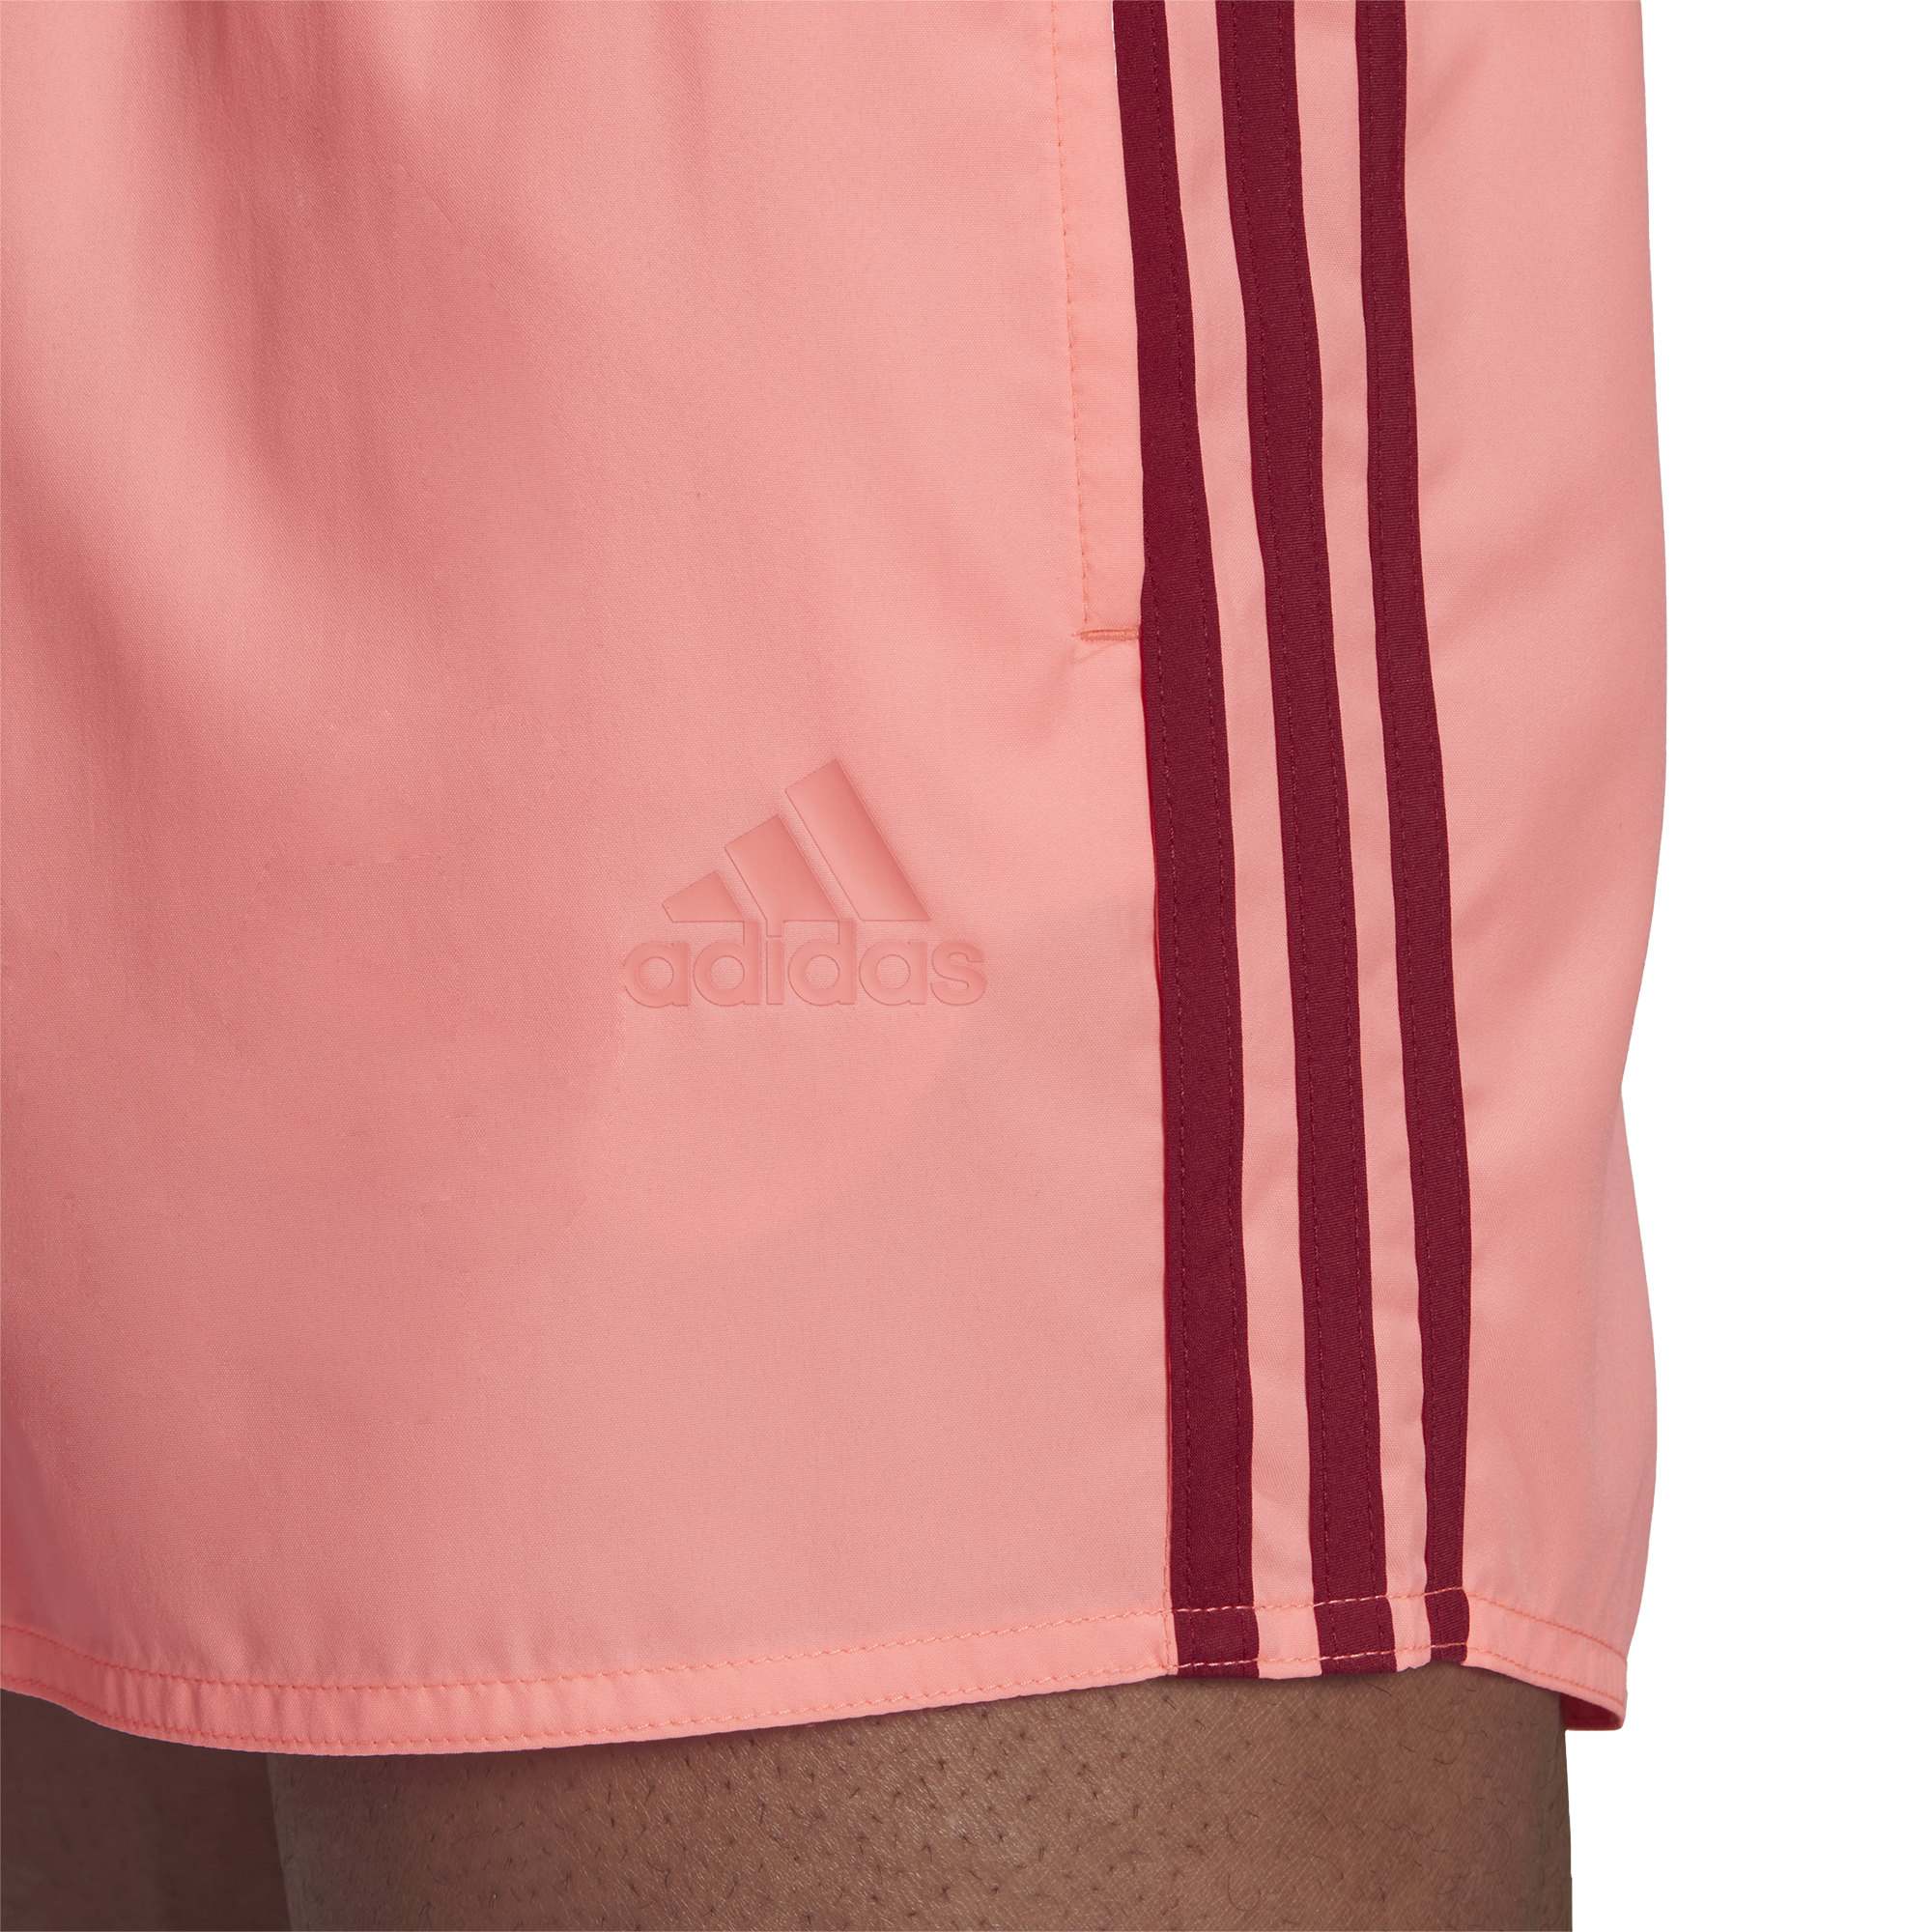 Adidas Classic 3 Stripe Swim Shorts